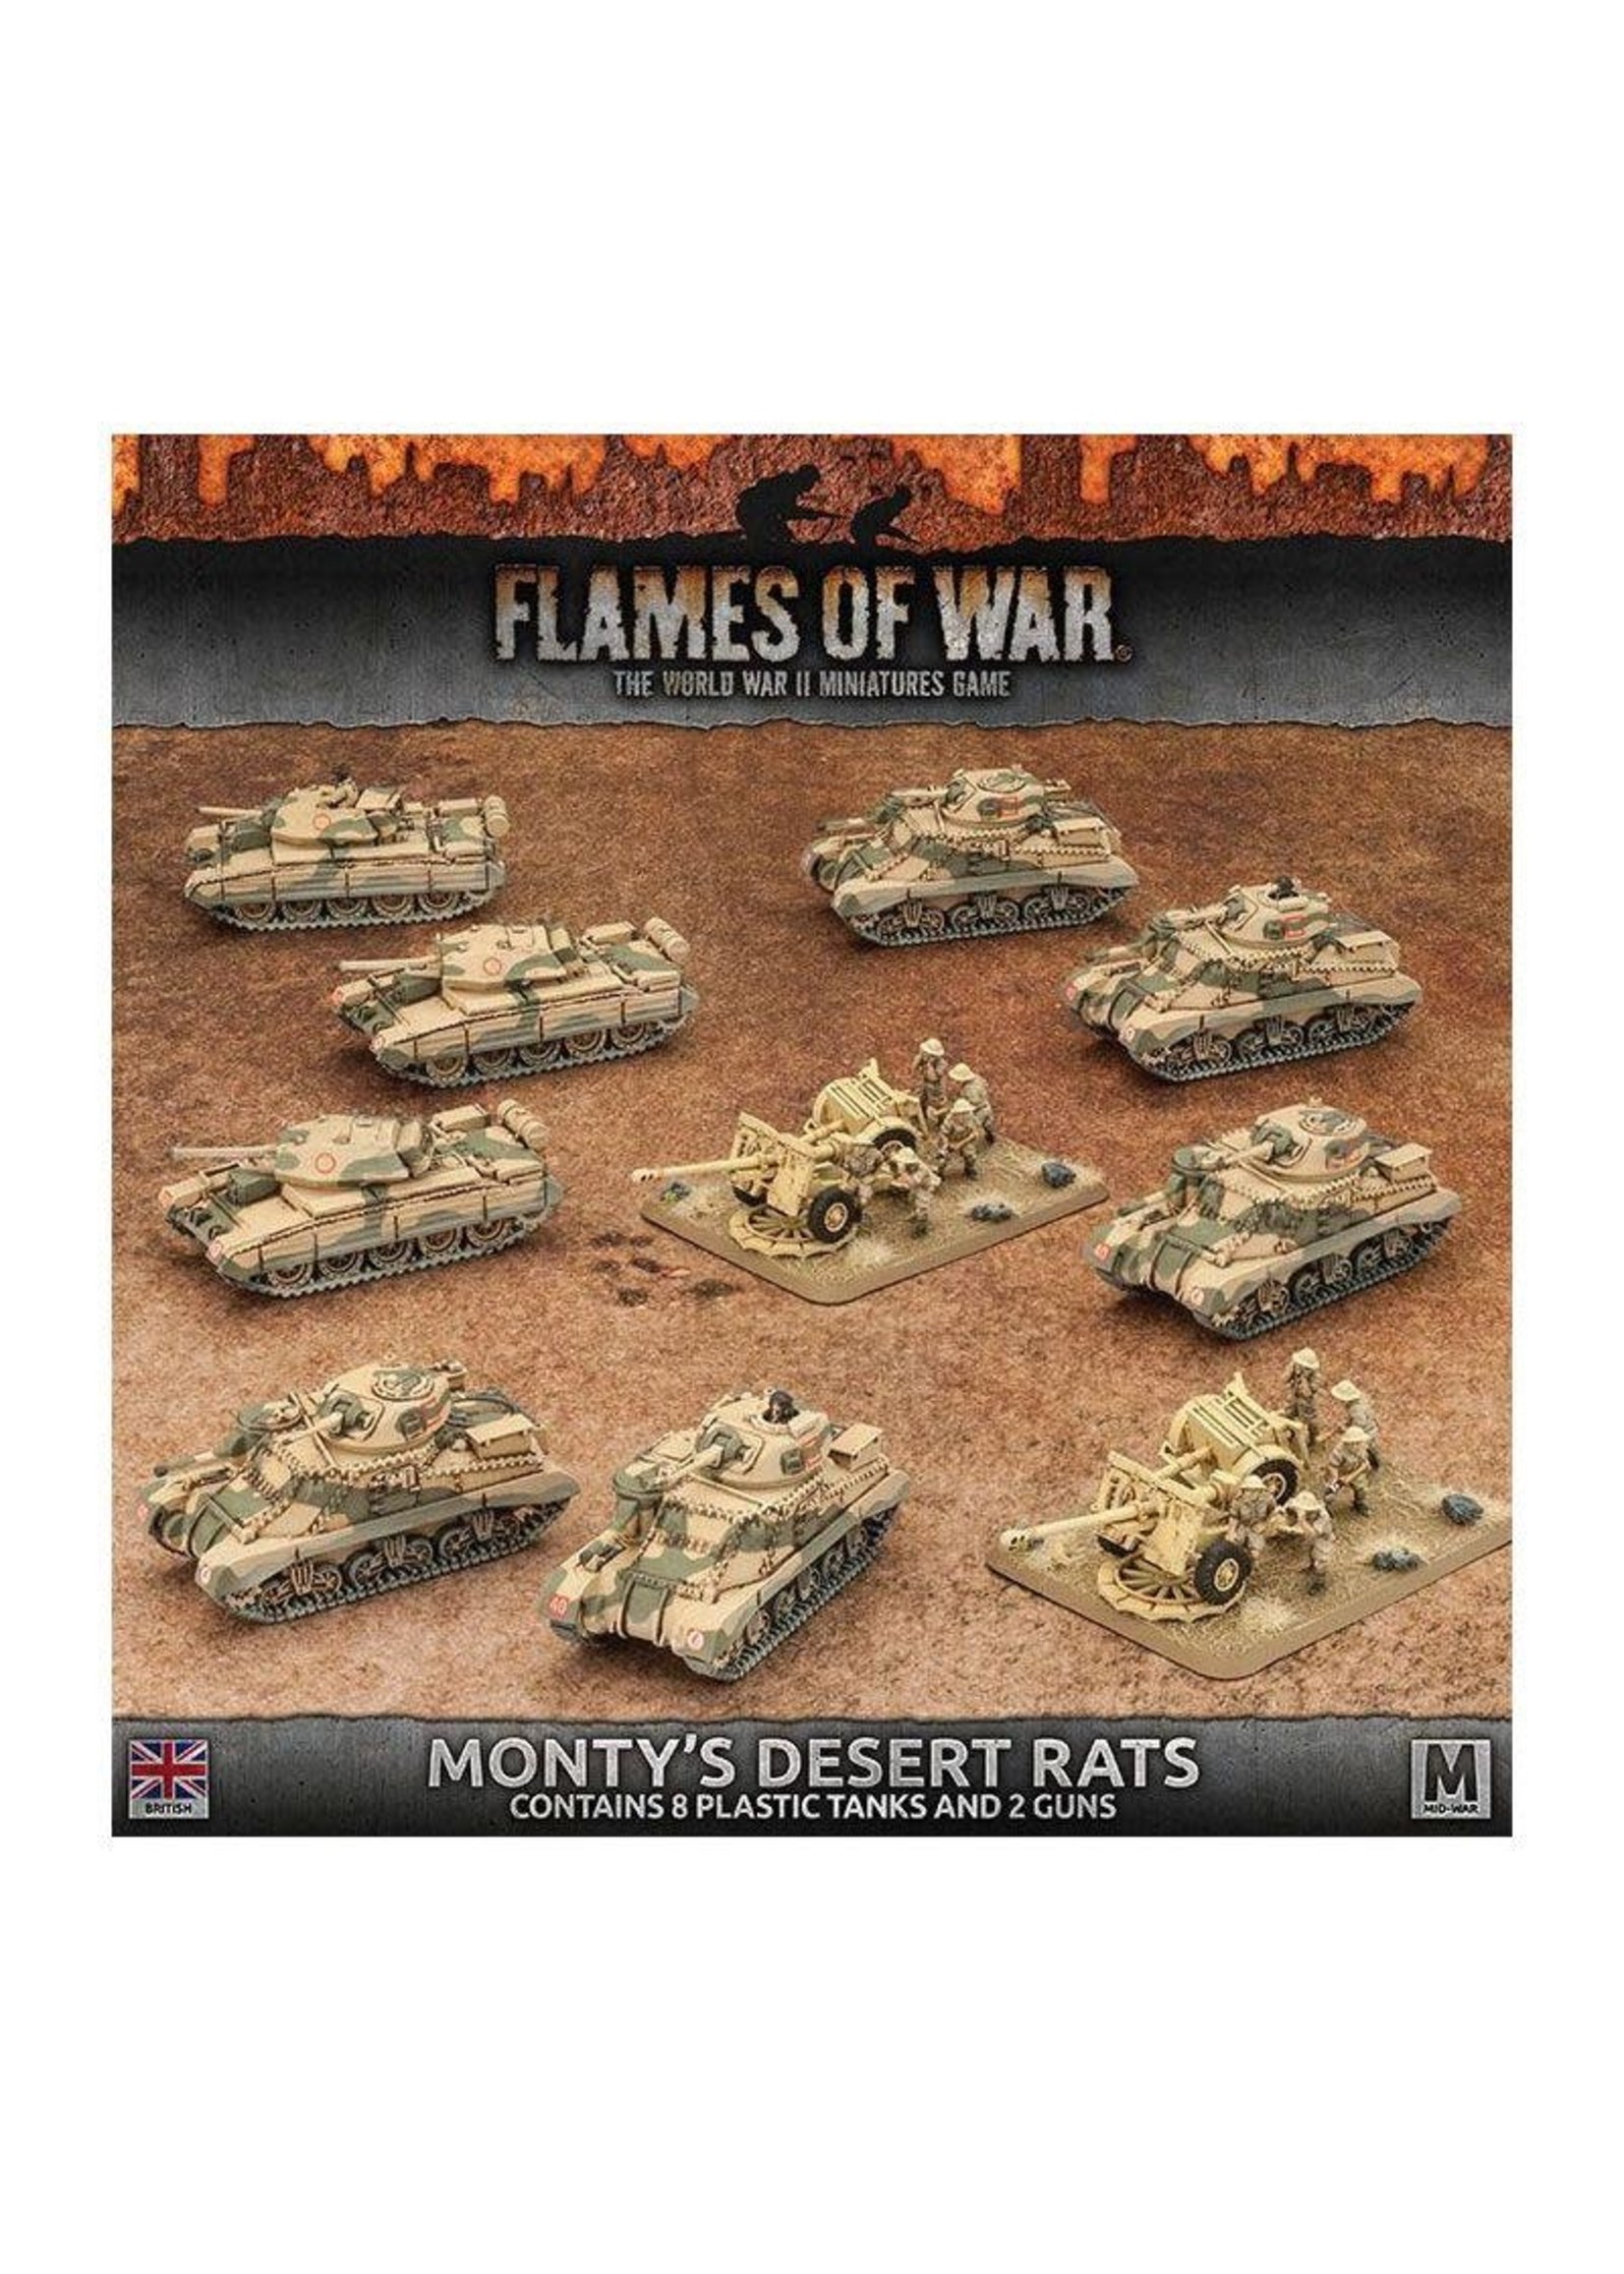 MONTY'S DESERT RATS